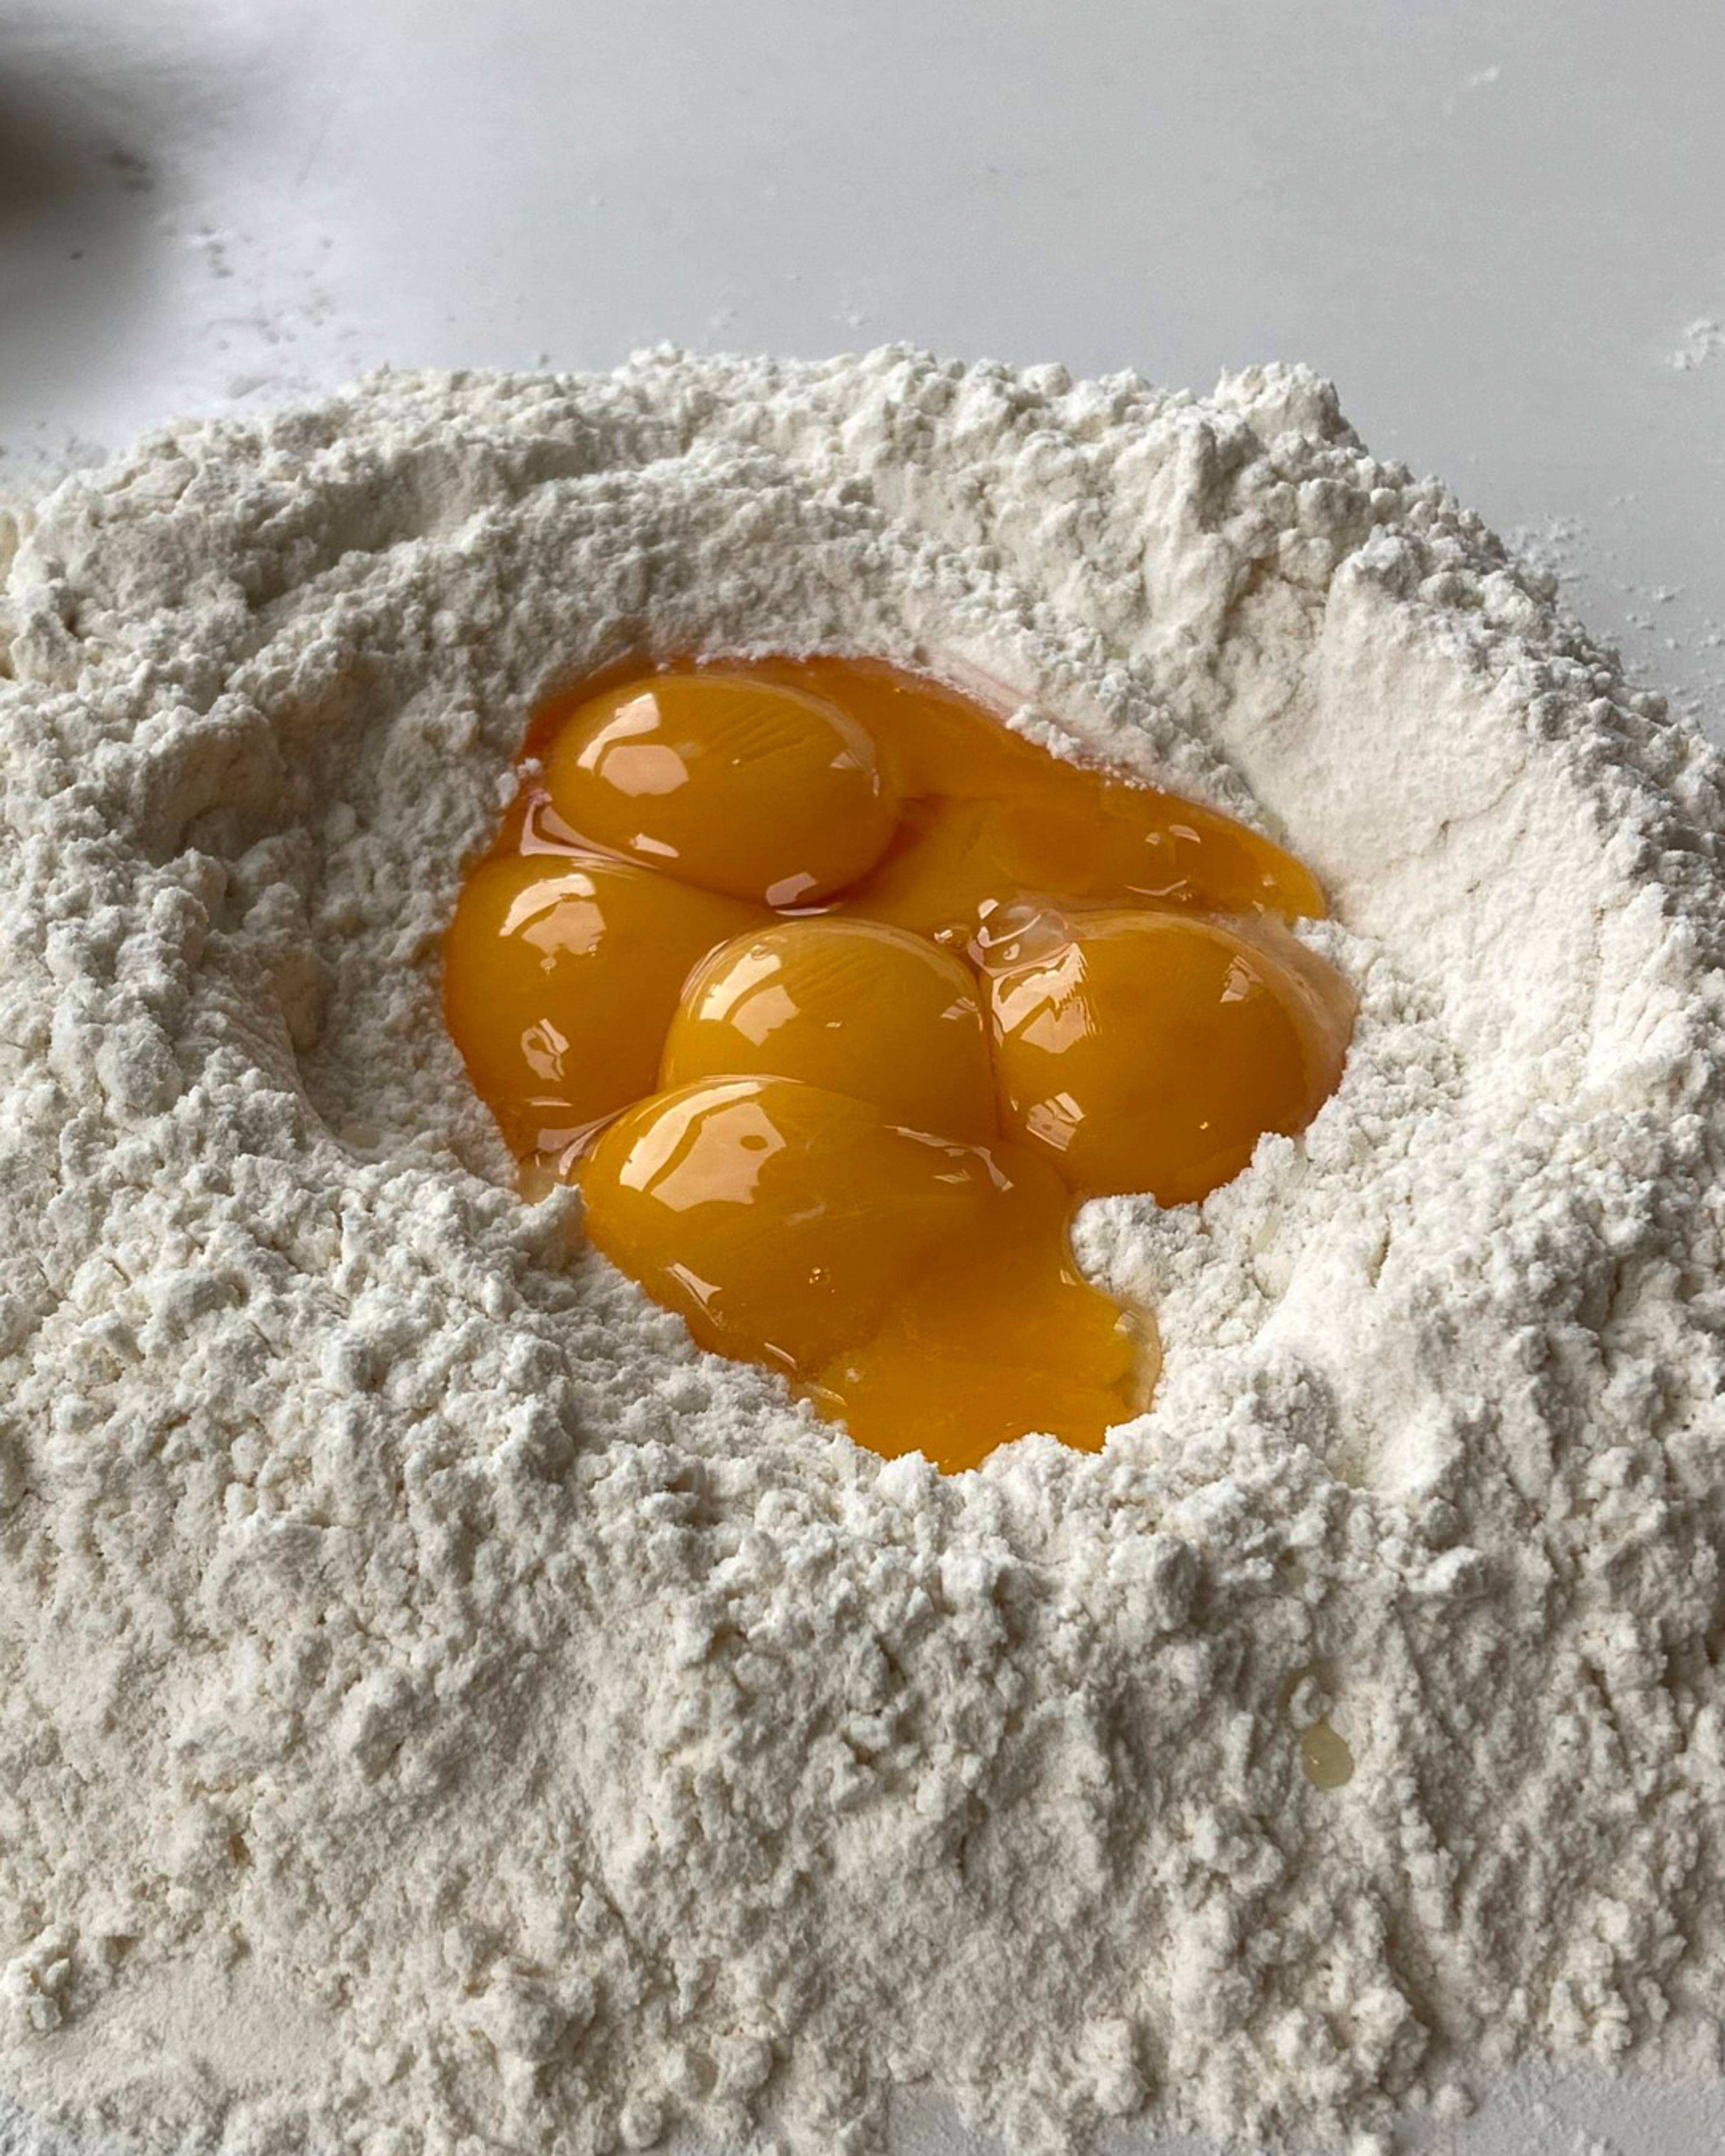 Egg yolks in flour